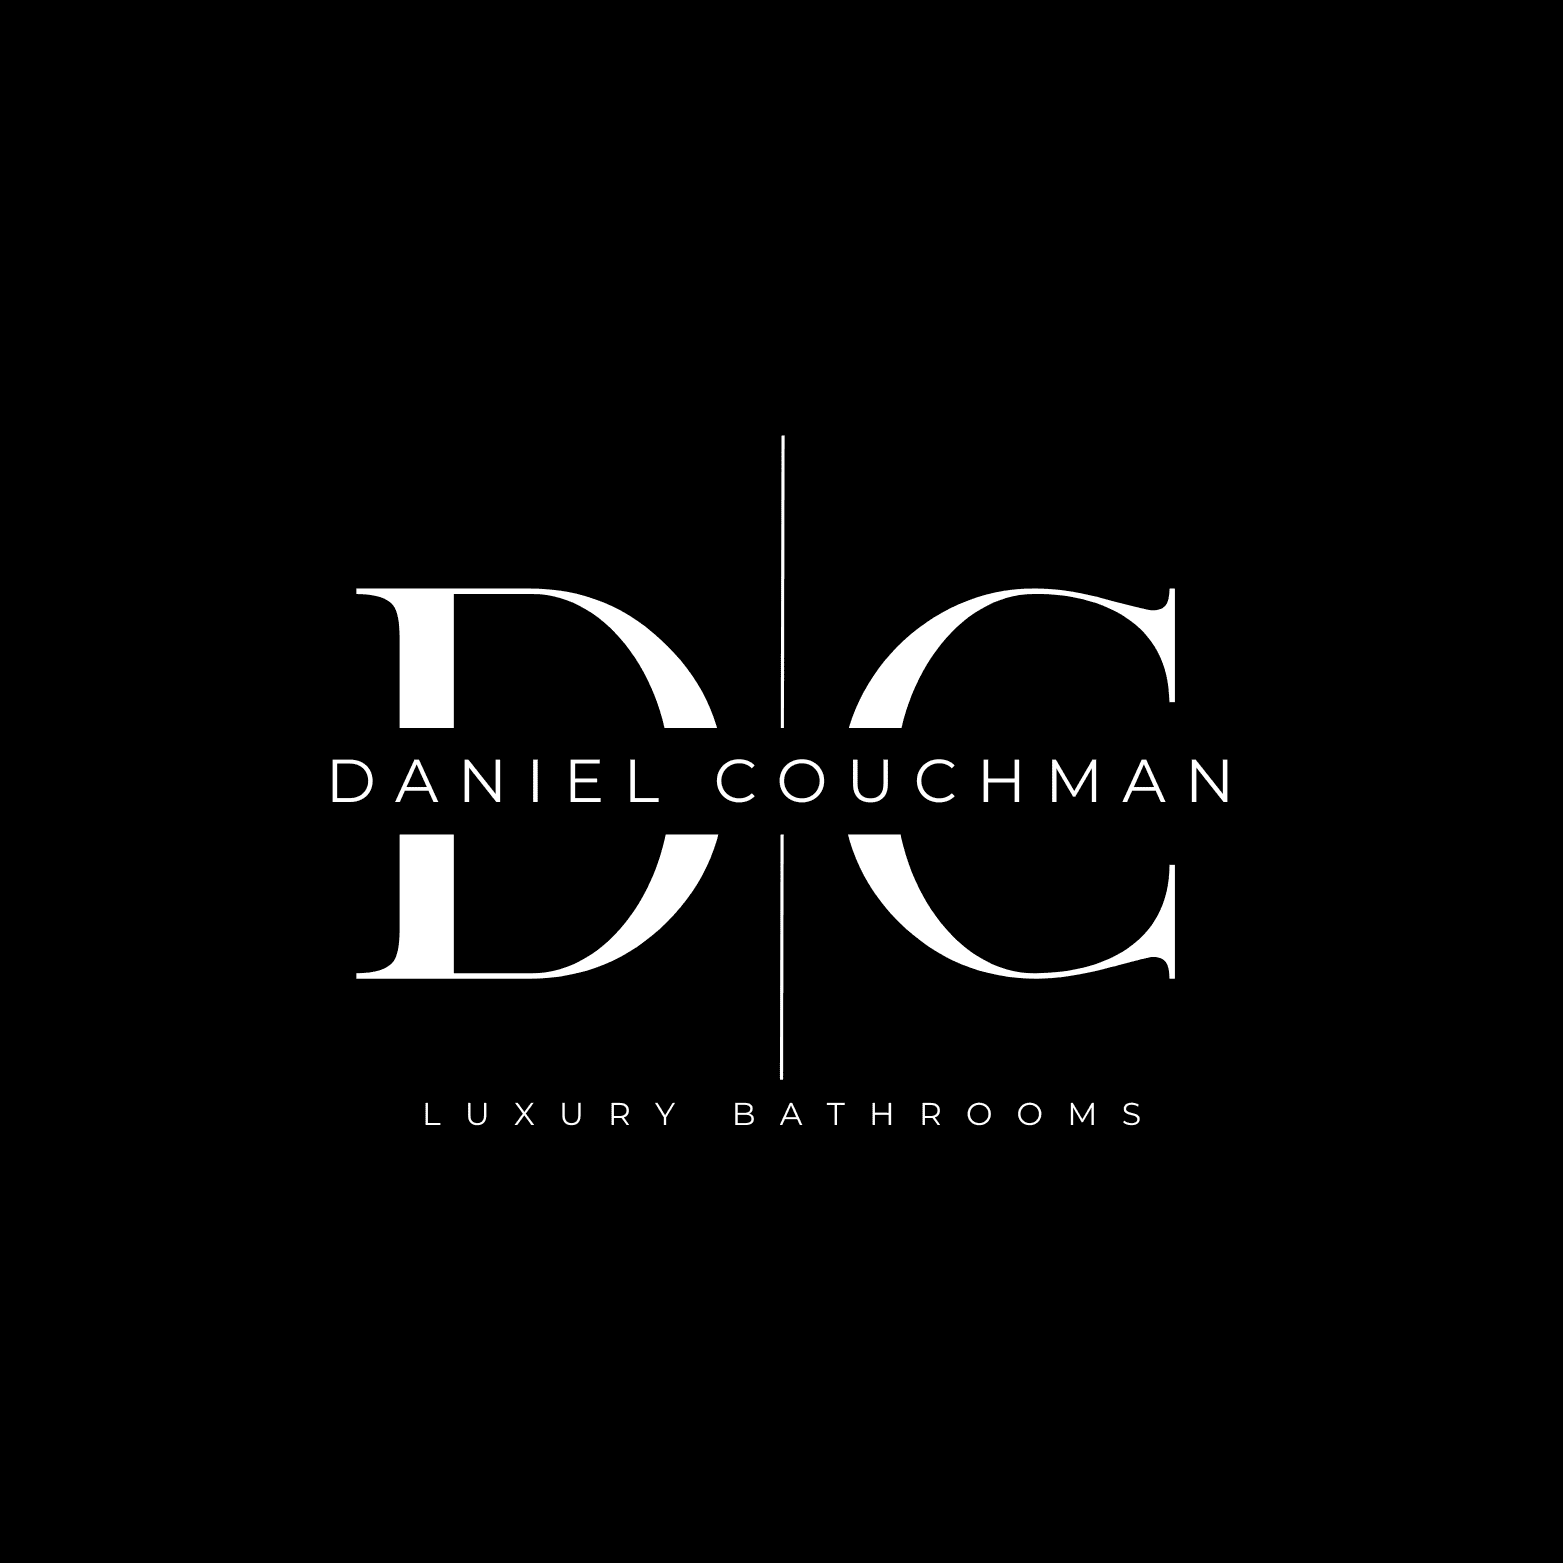 Daniel Couchman Luxury Bathrooms Ltd